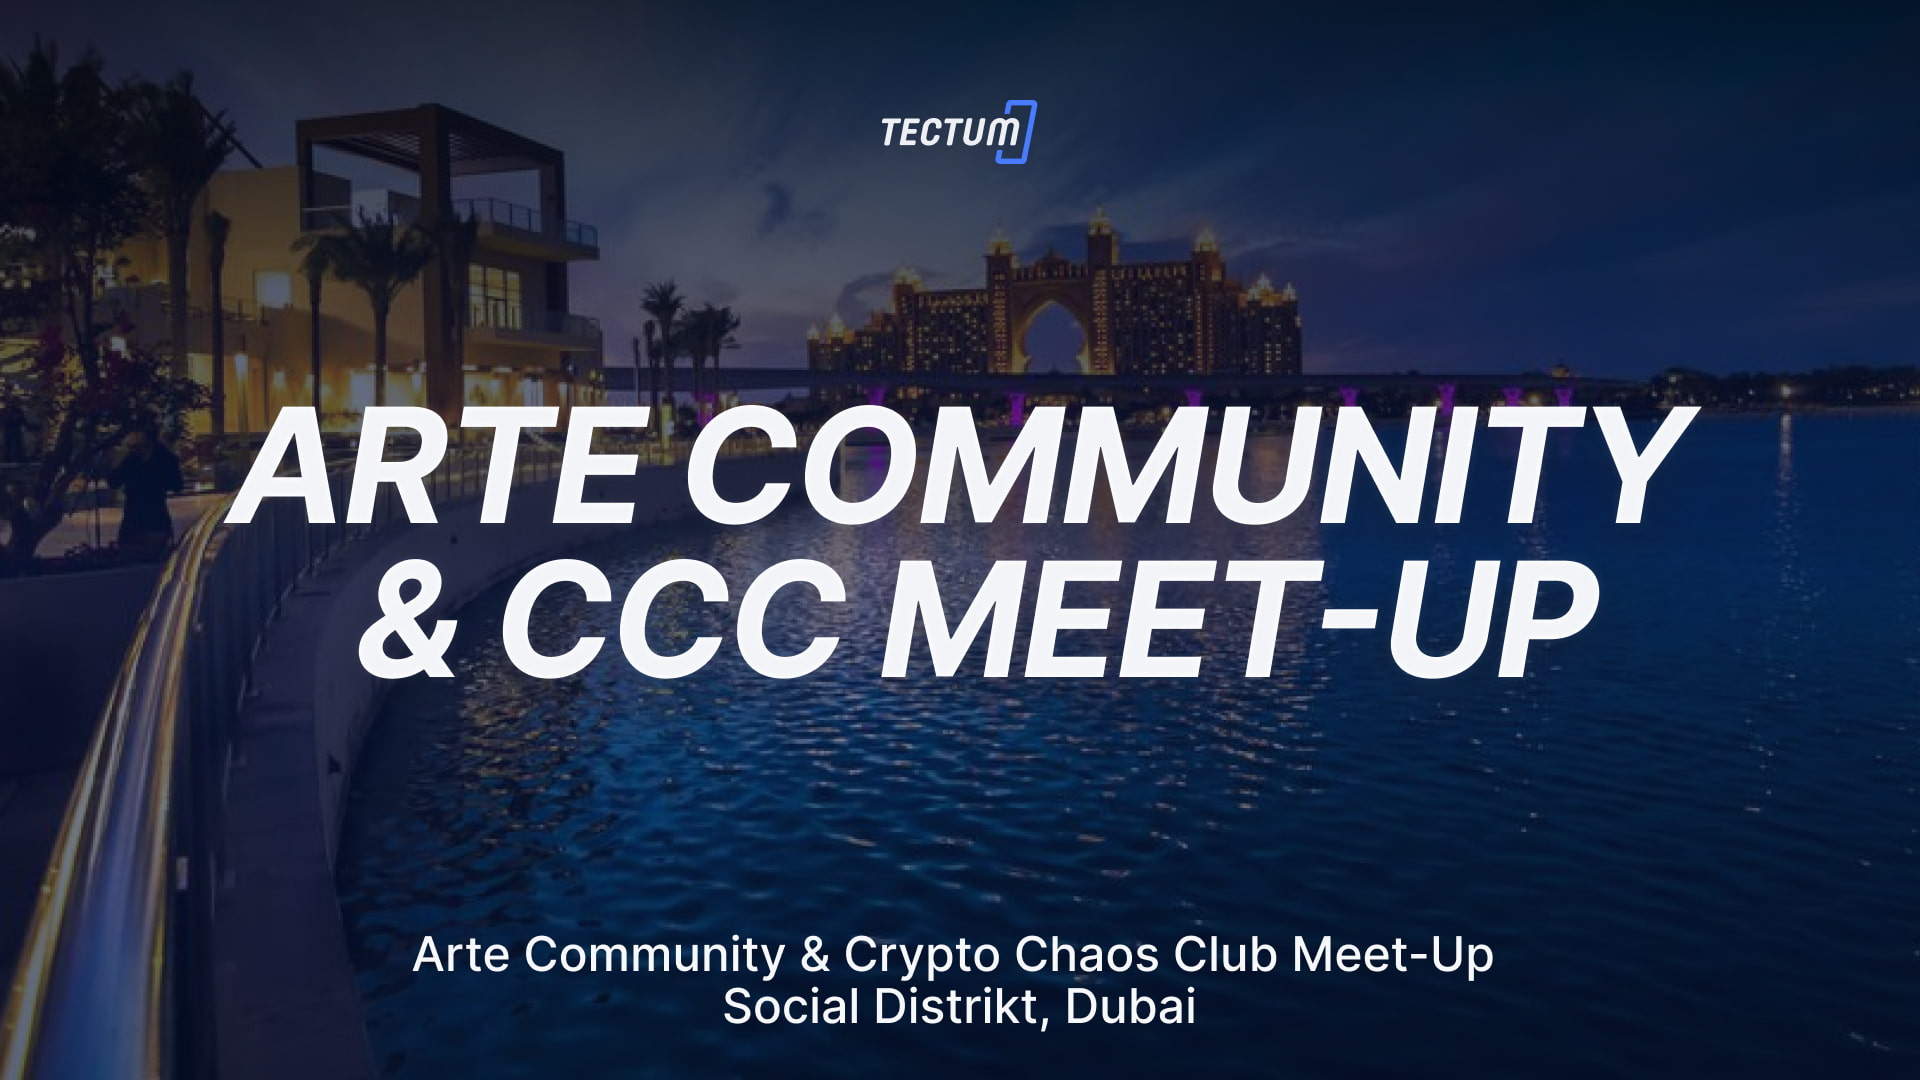 Meet Tectum at the Arte Community & Crypto Chaos Club Meet-Up